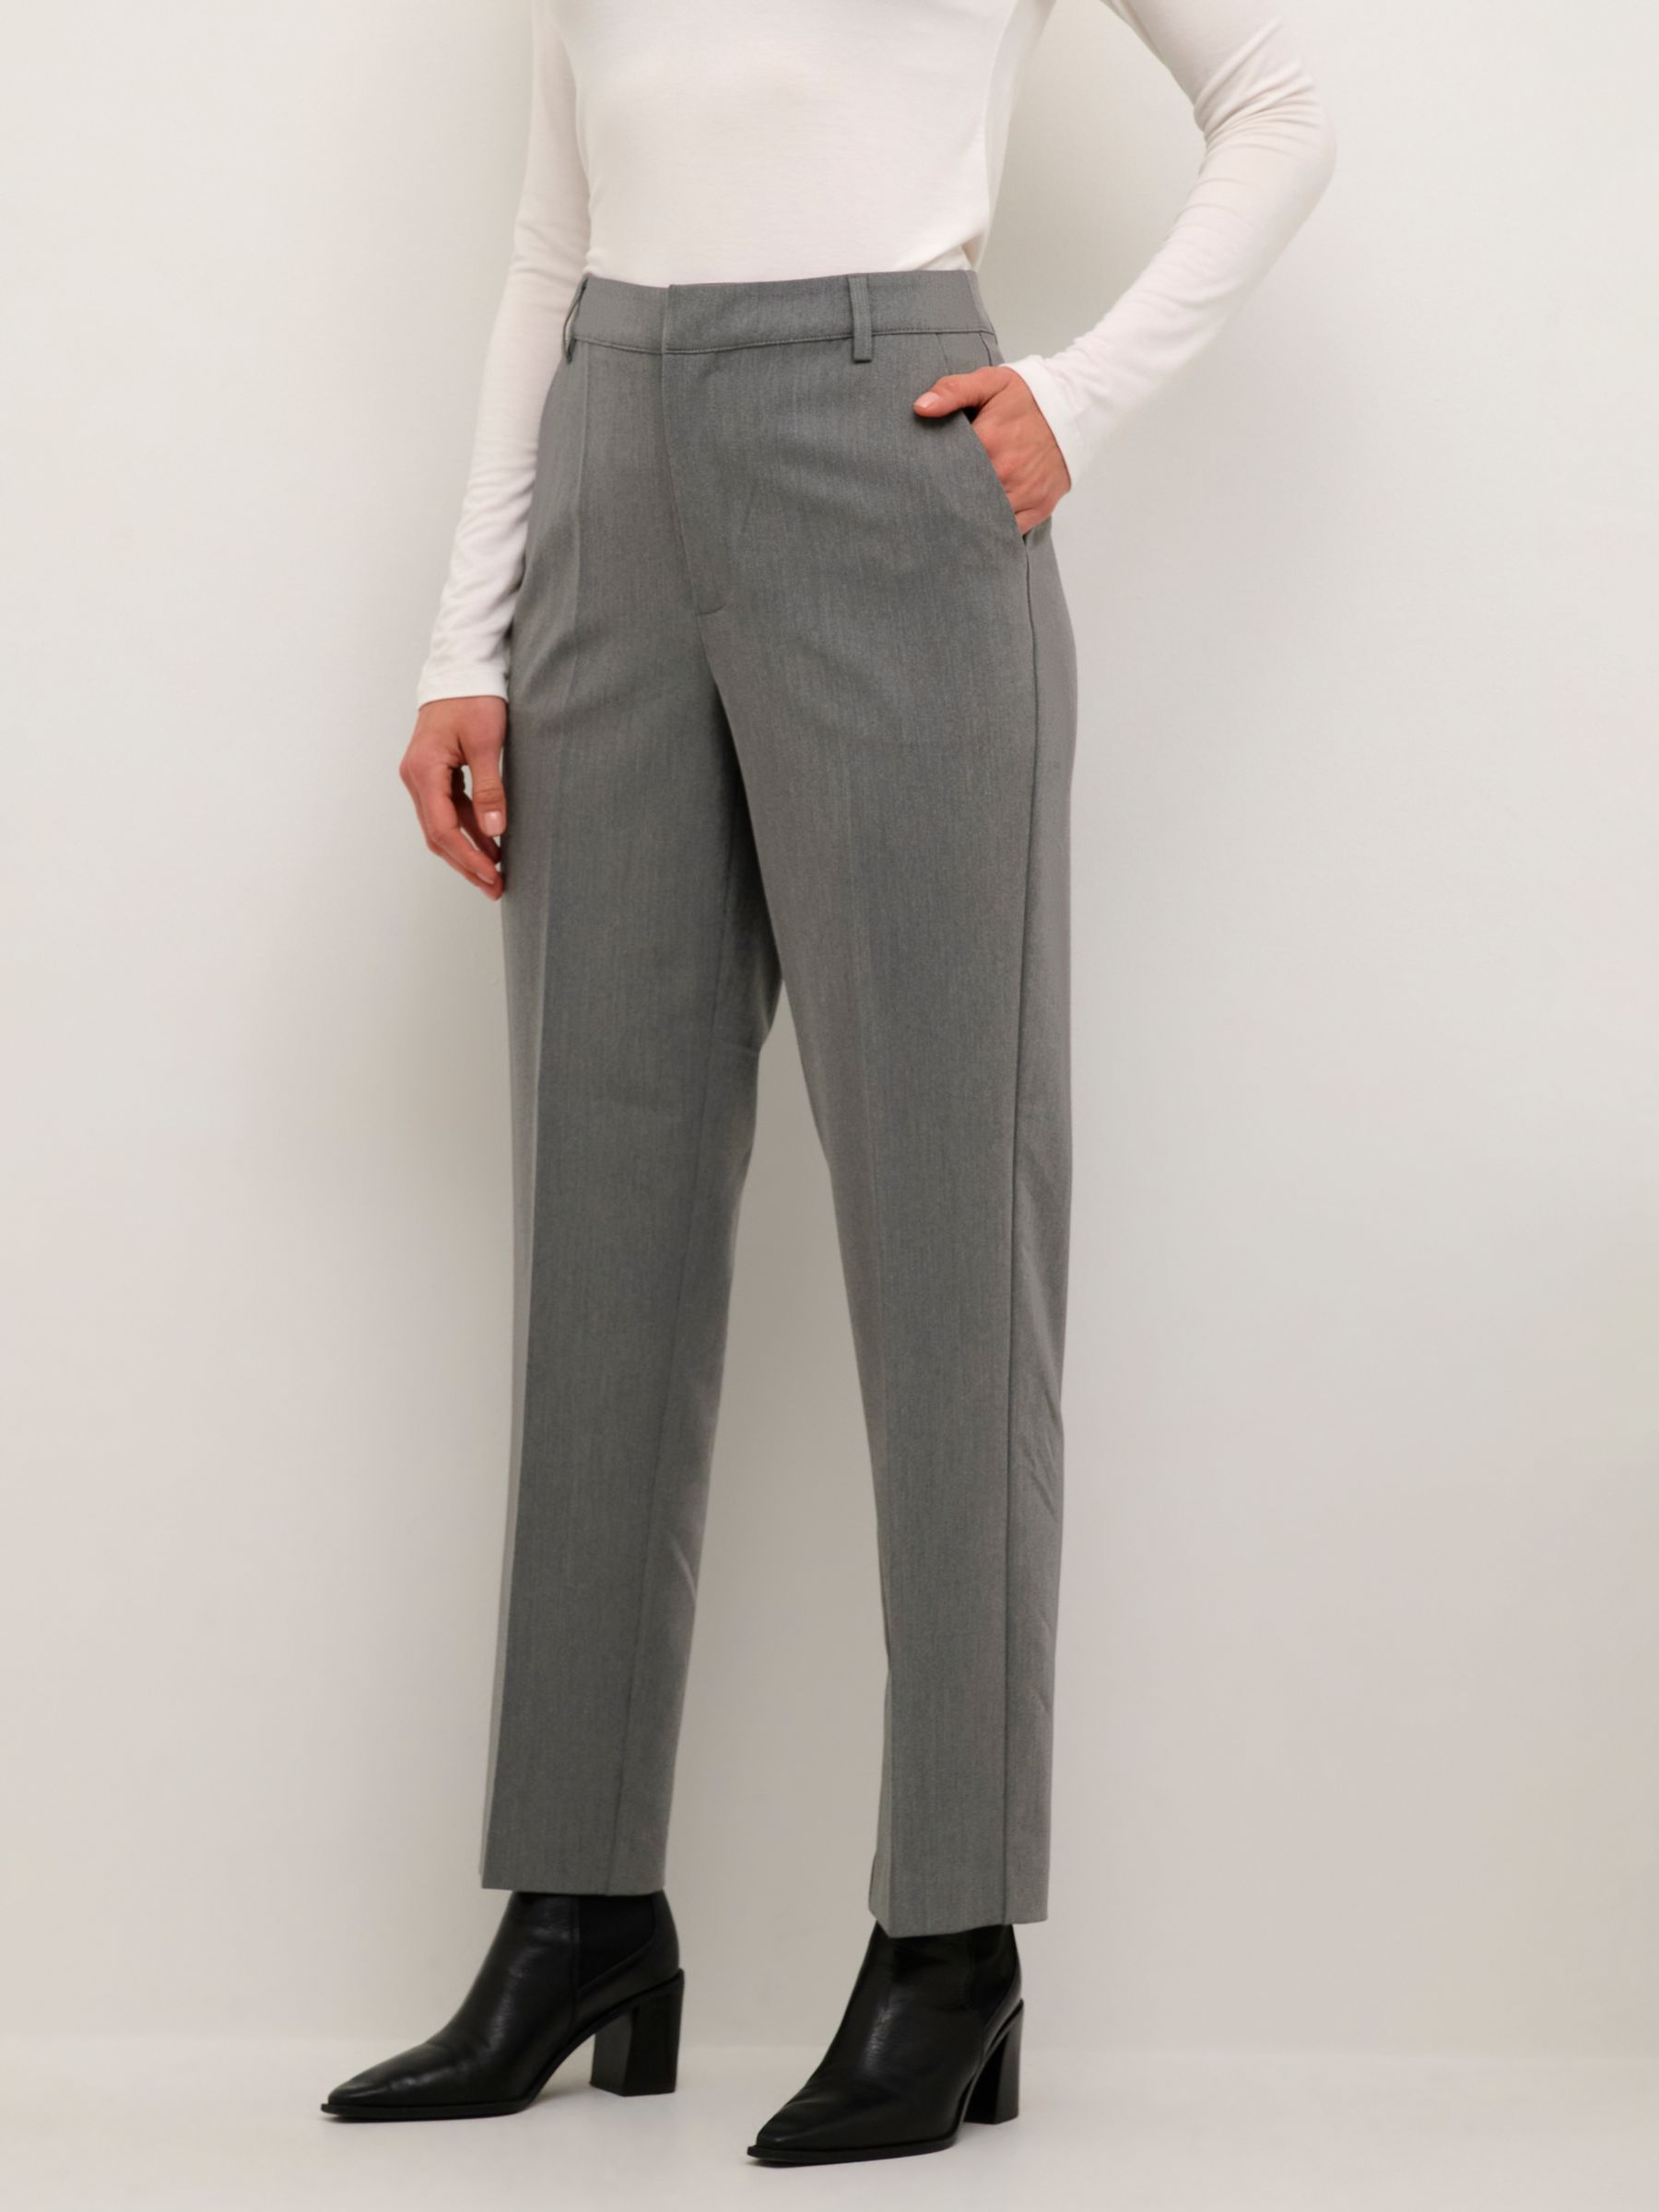 KAFFE Sakura Zip Trousers, Dark Grey Melange at John Lewis & Partners